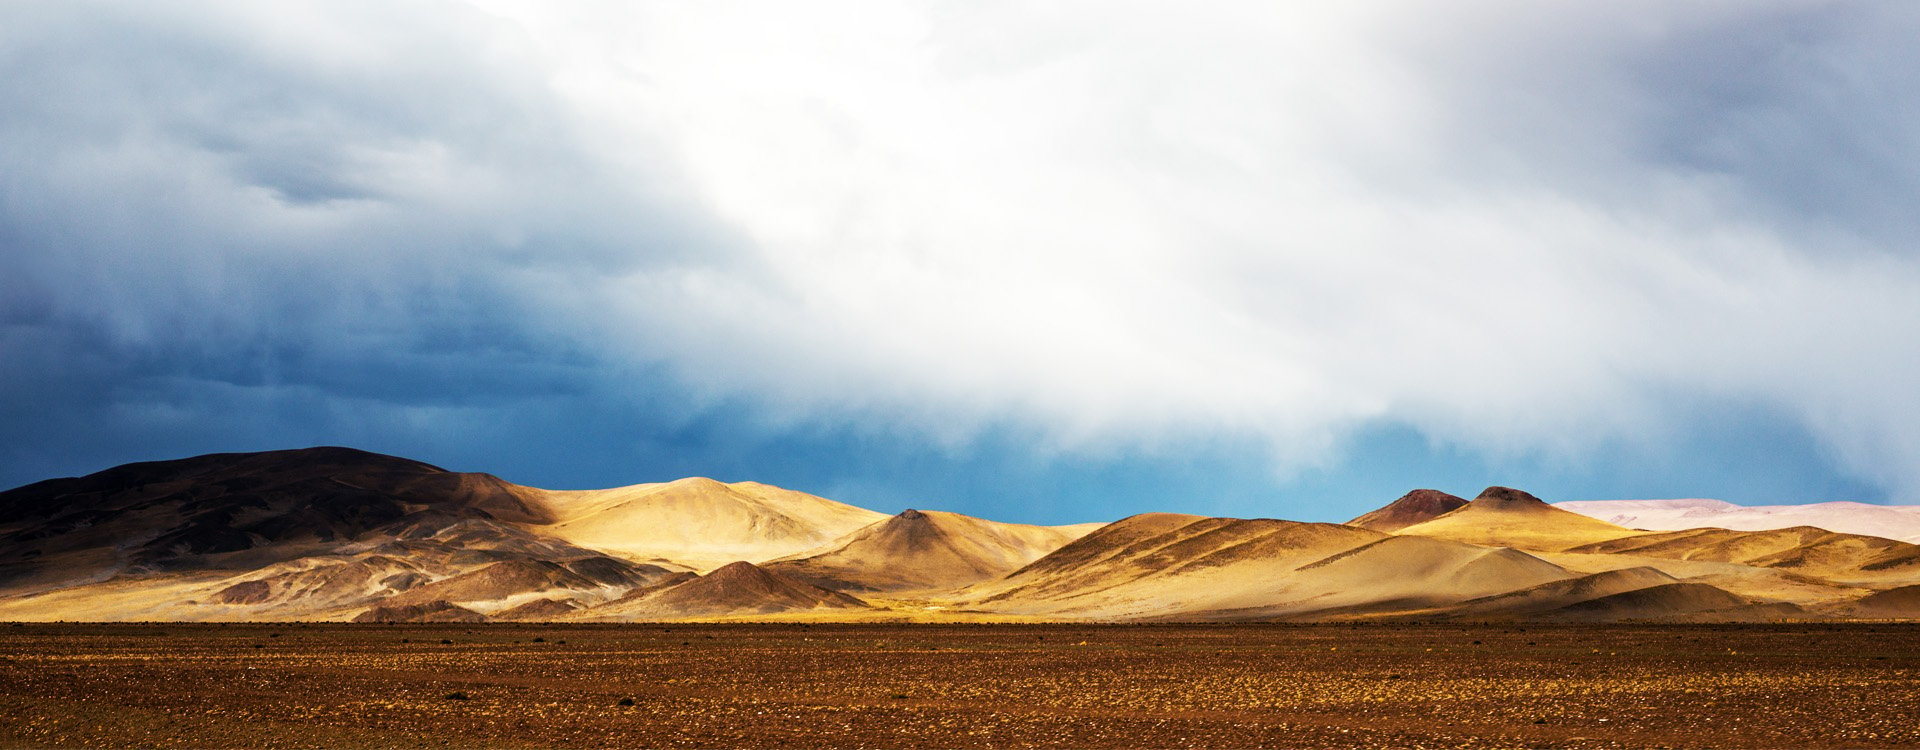 Northwest Argentina Desert Landscape, near near Paso de Jama, Argentina-Chile national border